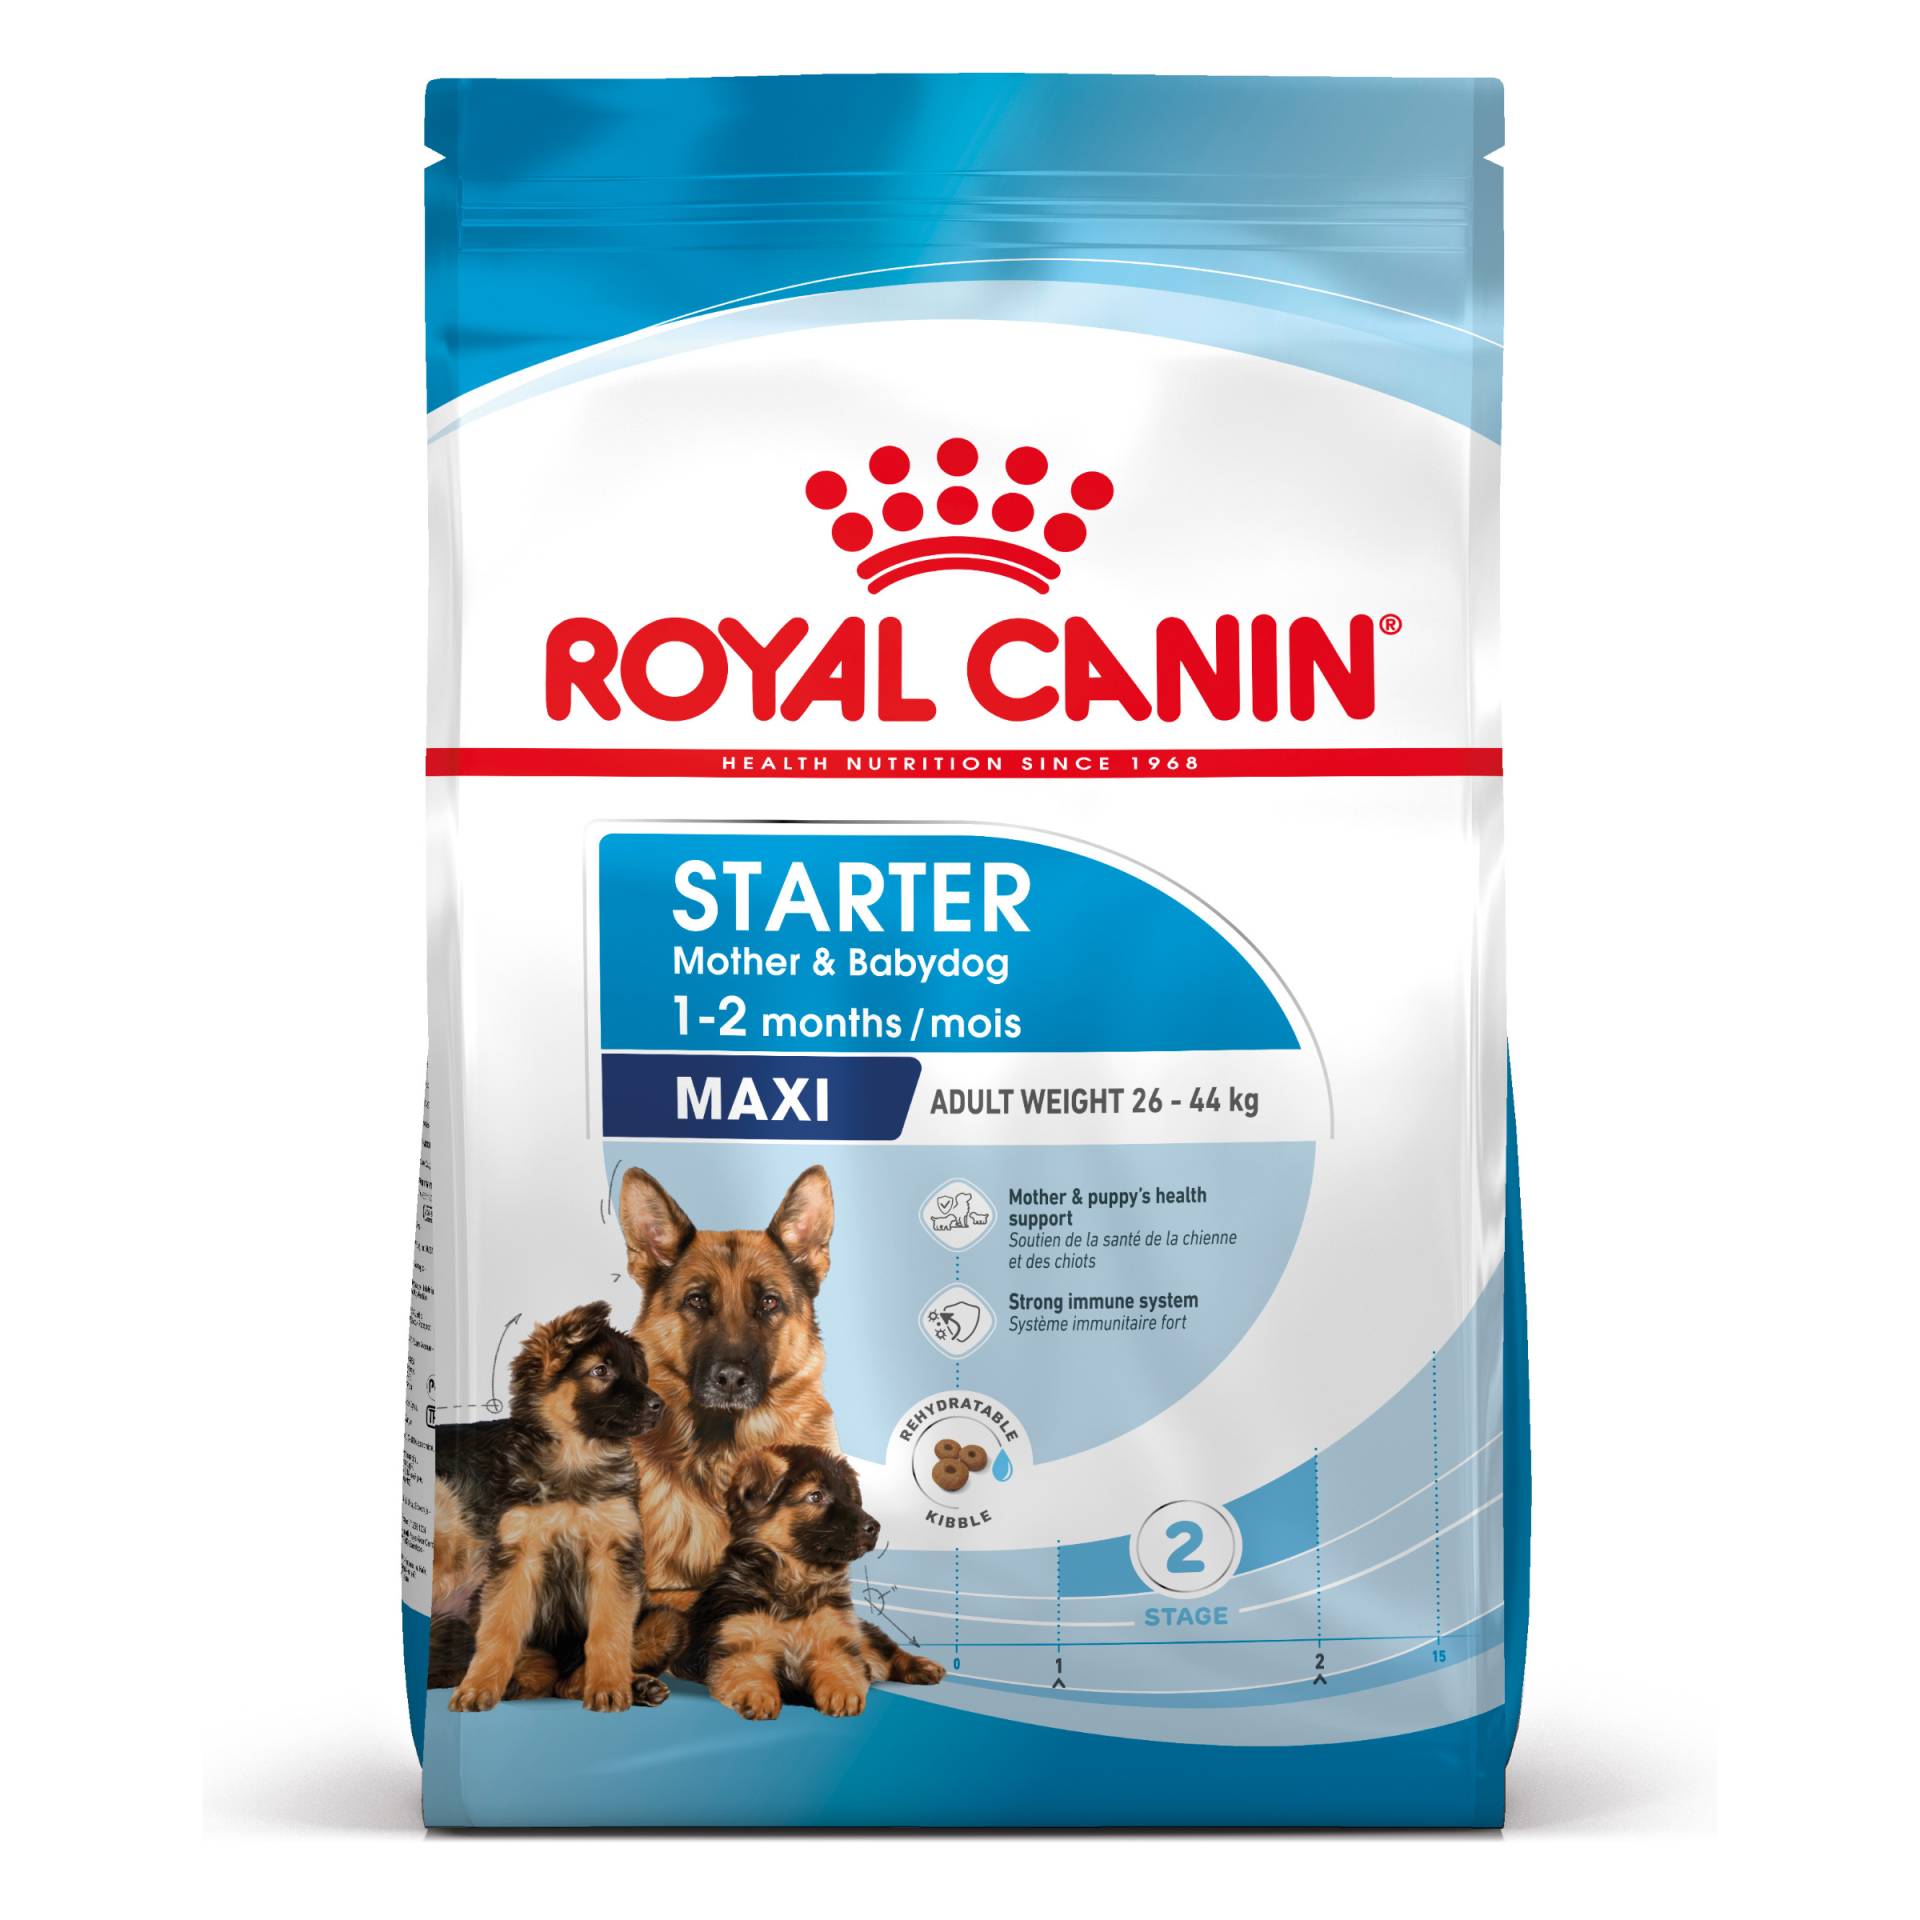 Royal Canin Maxi Starter Mother & Babydog - Sparpaket 2 x 15 kg von Royal Canin Size